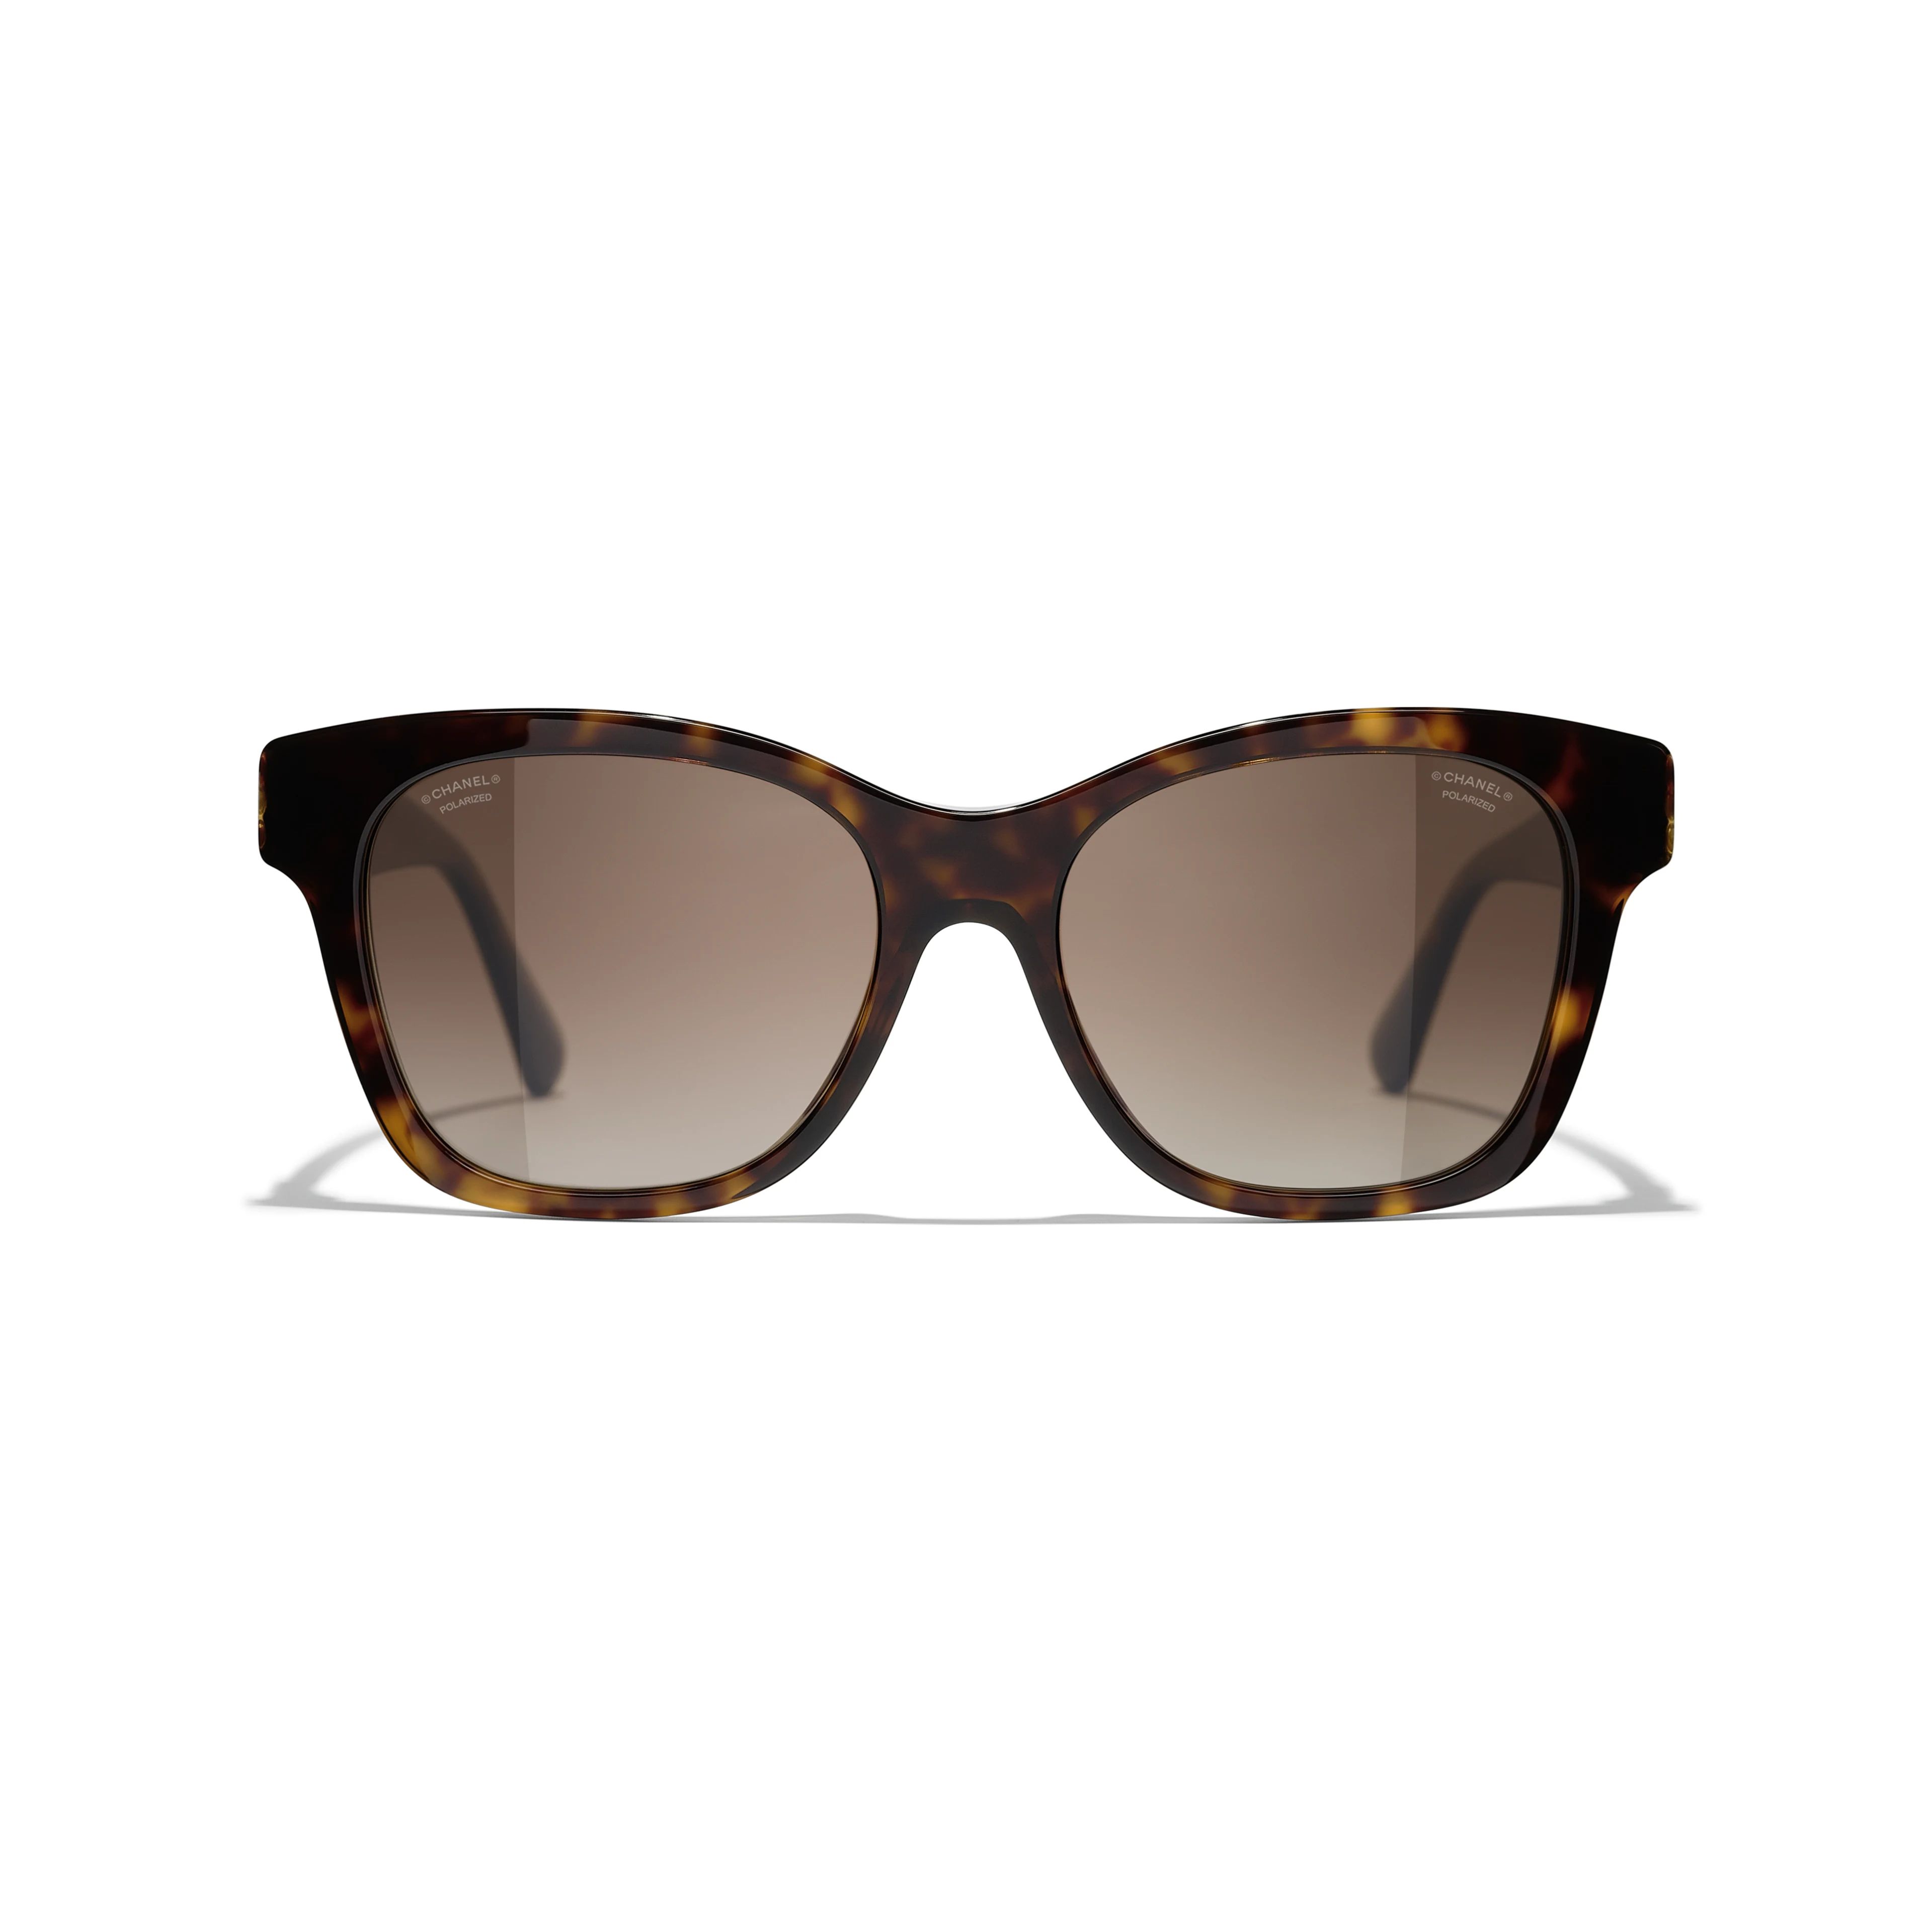 Sunglasses: Square Sunglasses, acetate & glass pearls — Fashion | CHANEL | Chanel, Inc. (US)